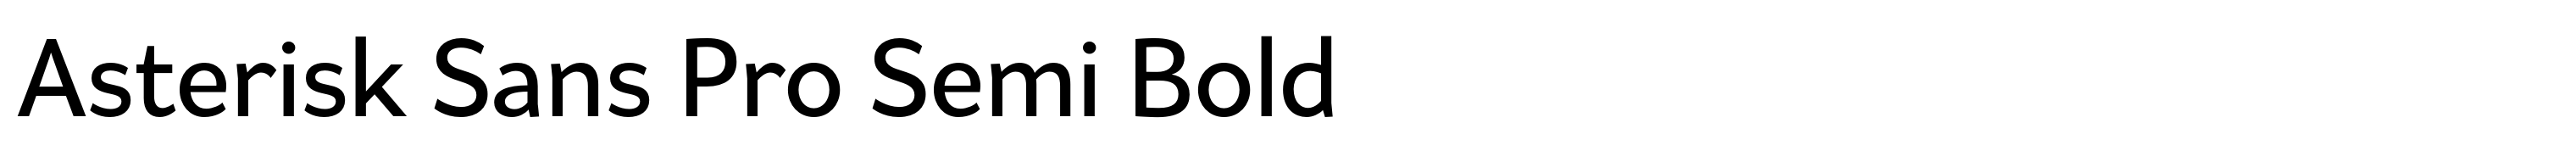 Asterisk Sans Pro Semi Bold